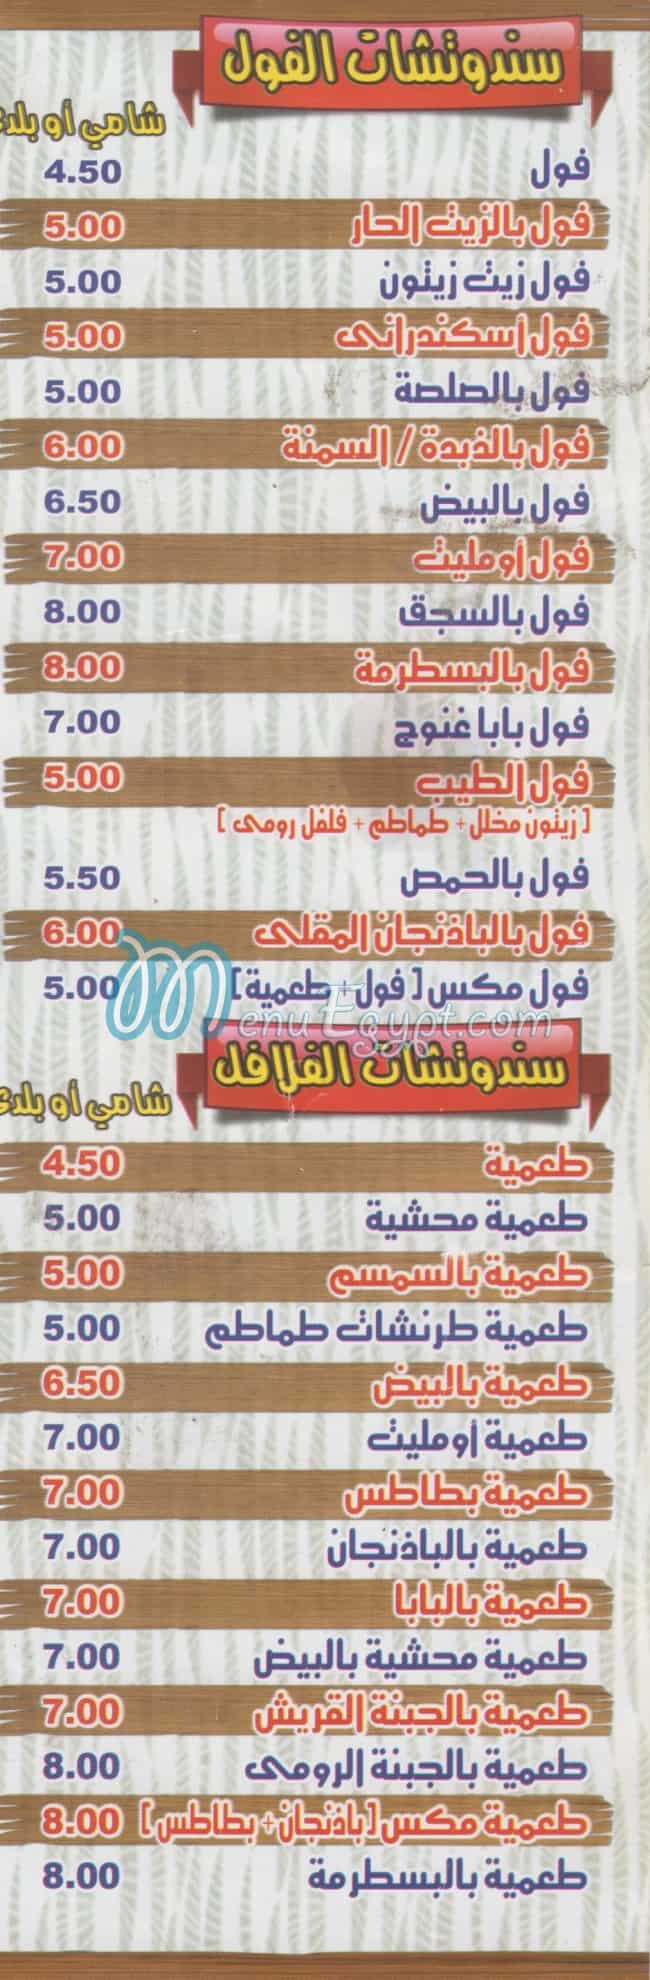 EL Tayeb menu Egypt 1